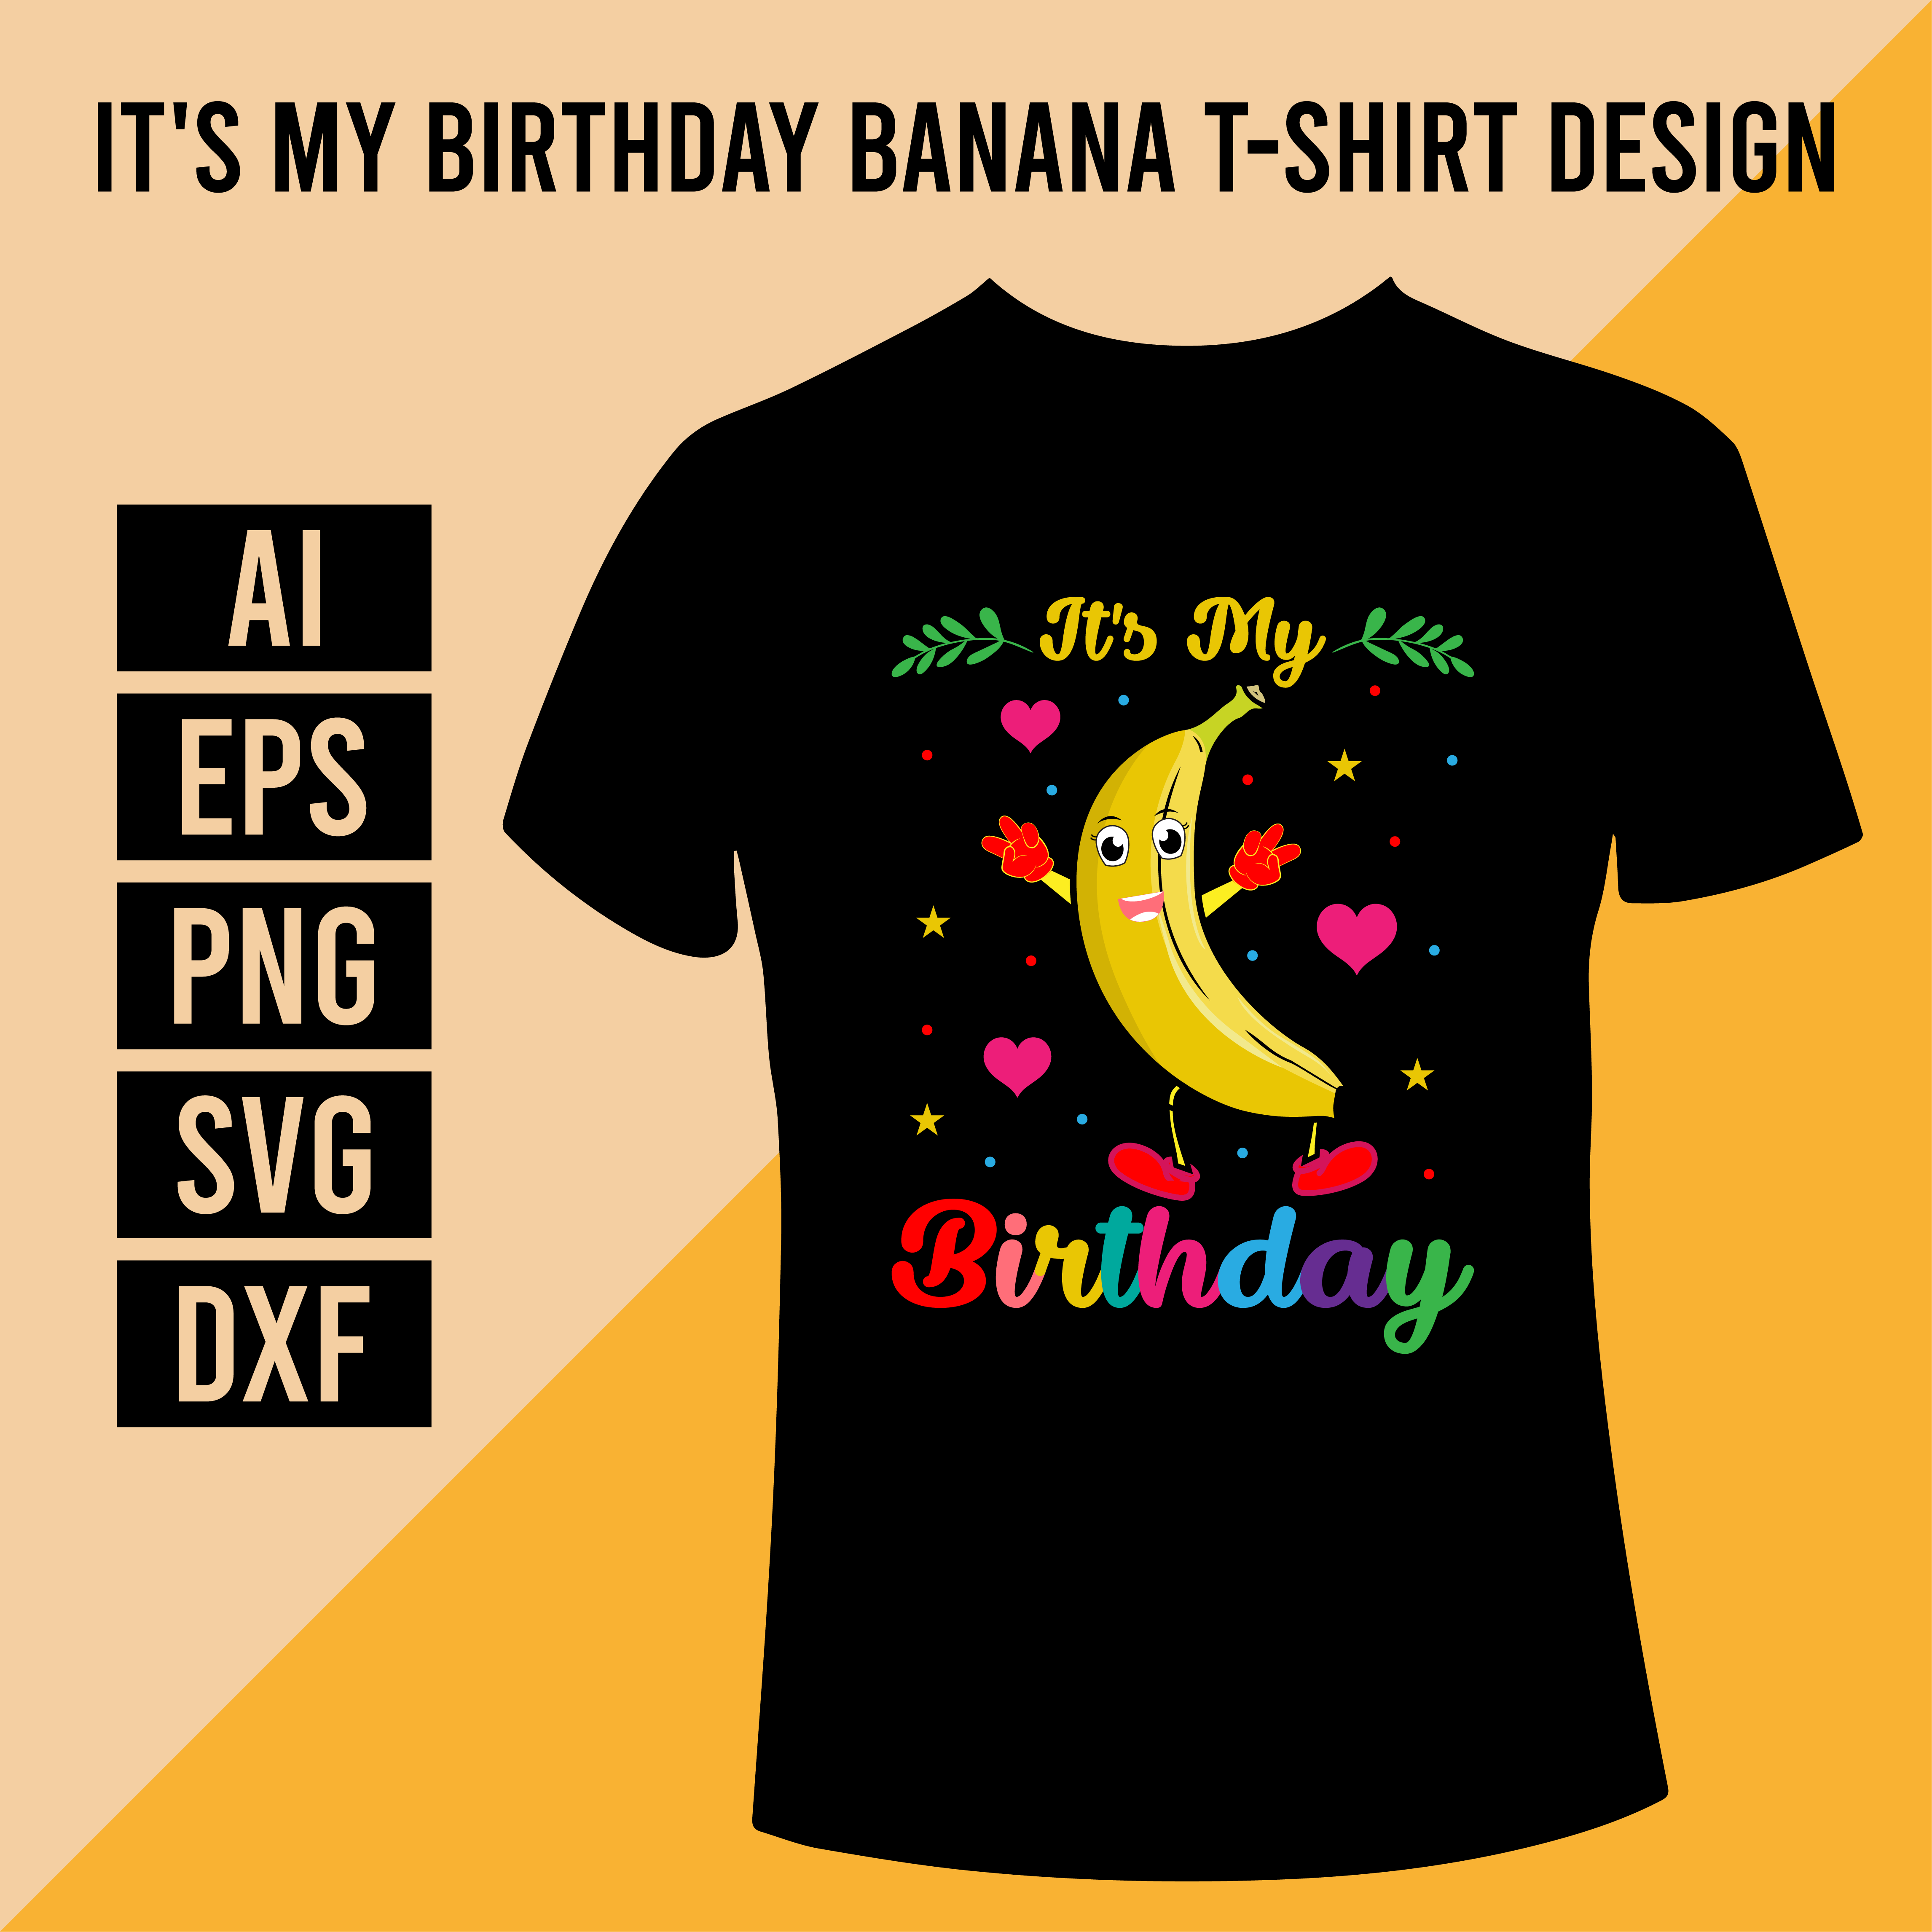 It's My Birthday Banana T-Shirt Design cover image.